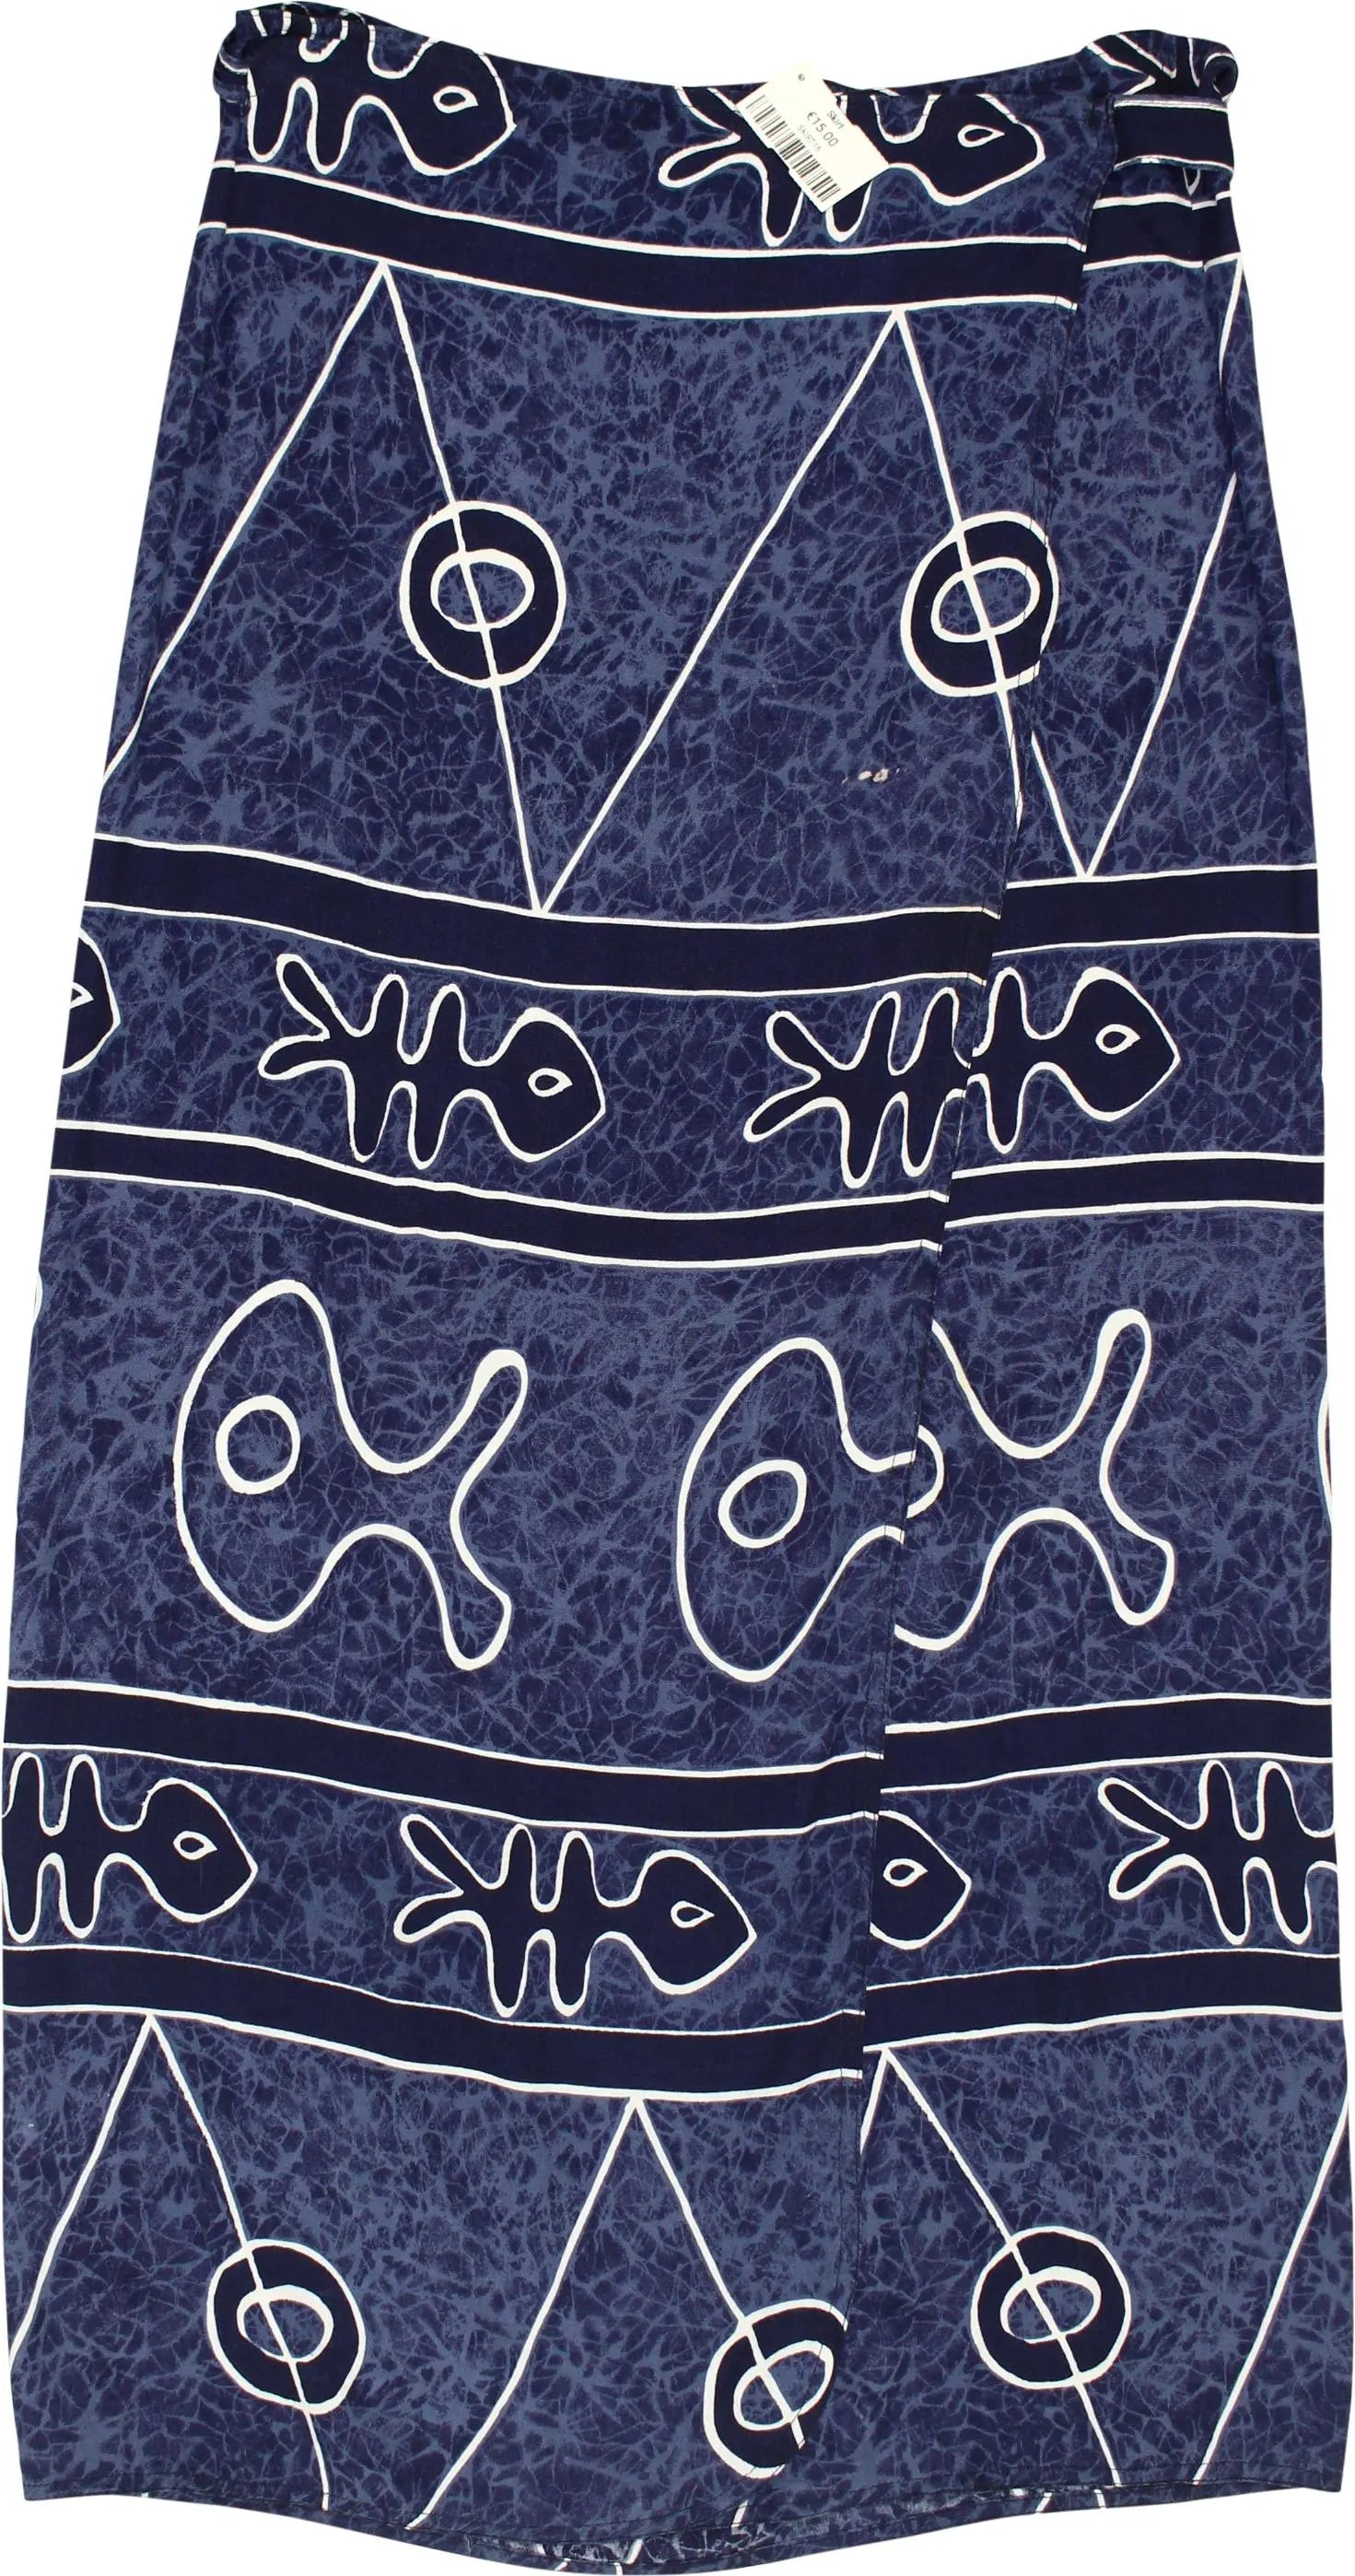 J.F.U. - Wrap Skirt- ThriftTale.com - Vintage and second handclothing